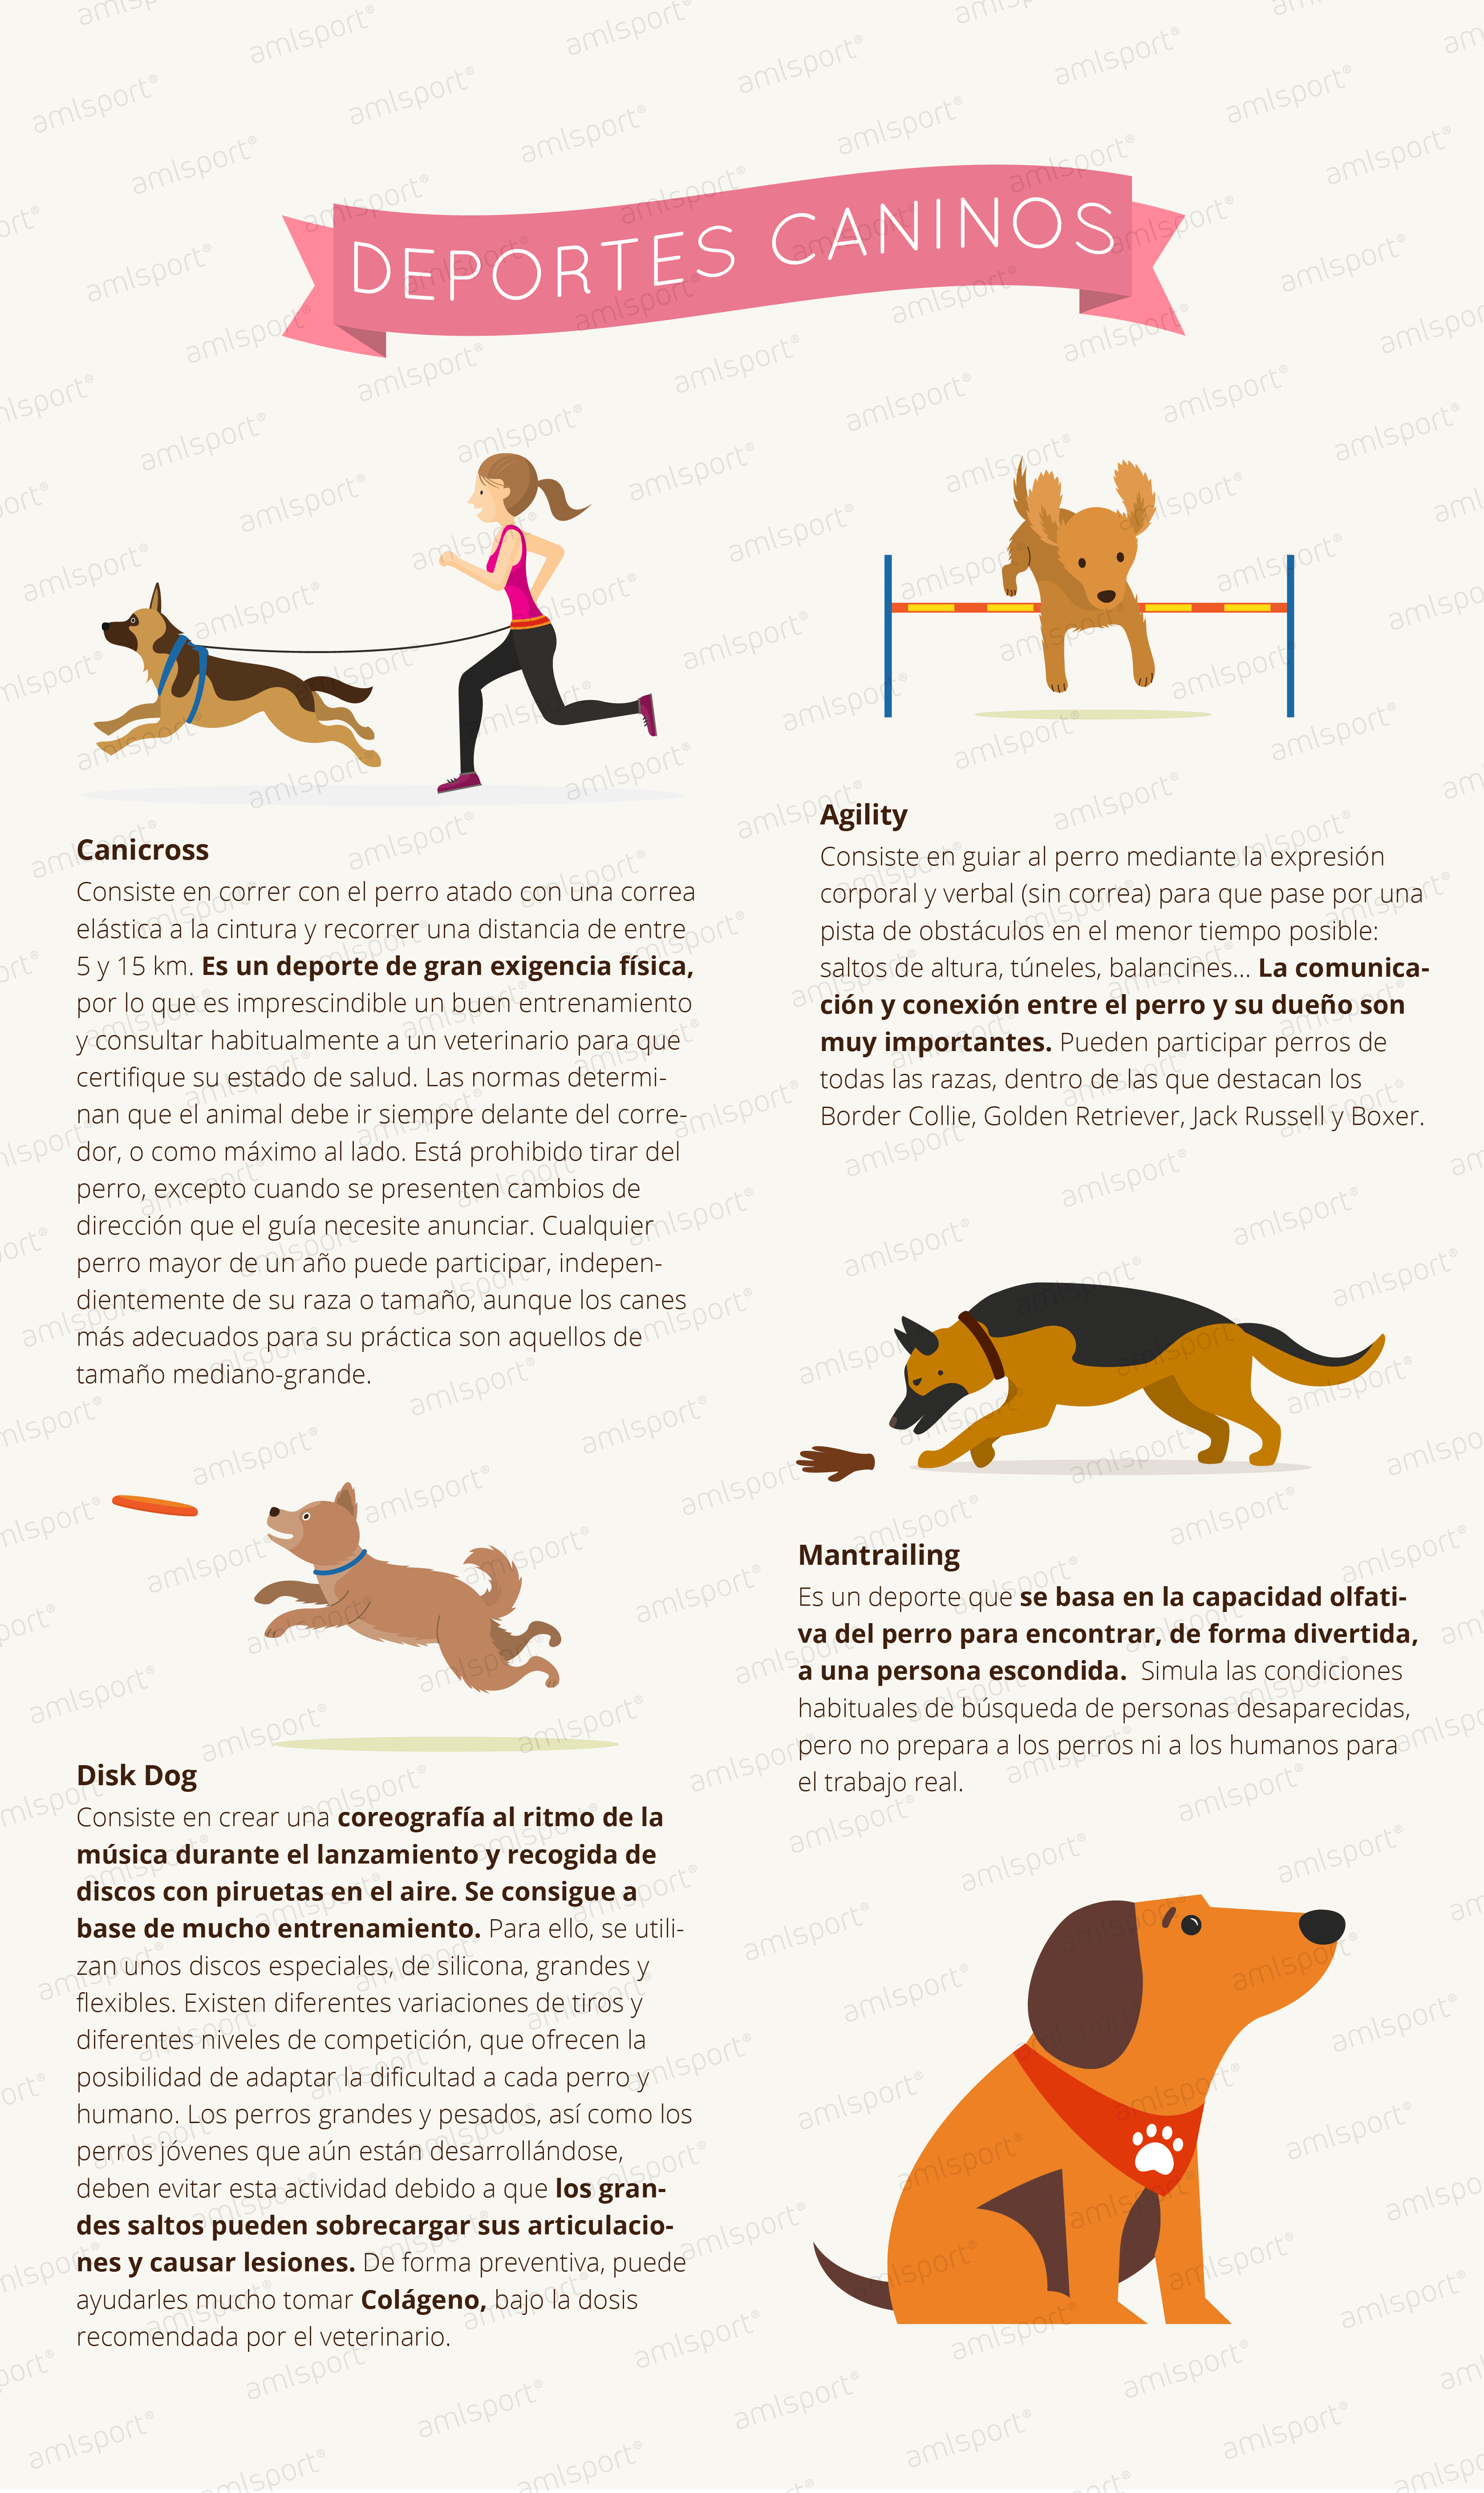 Deportes caninos